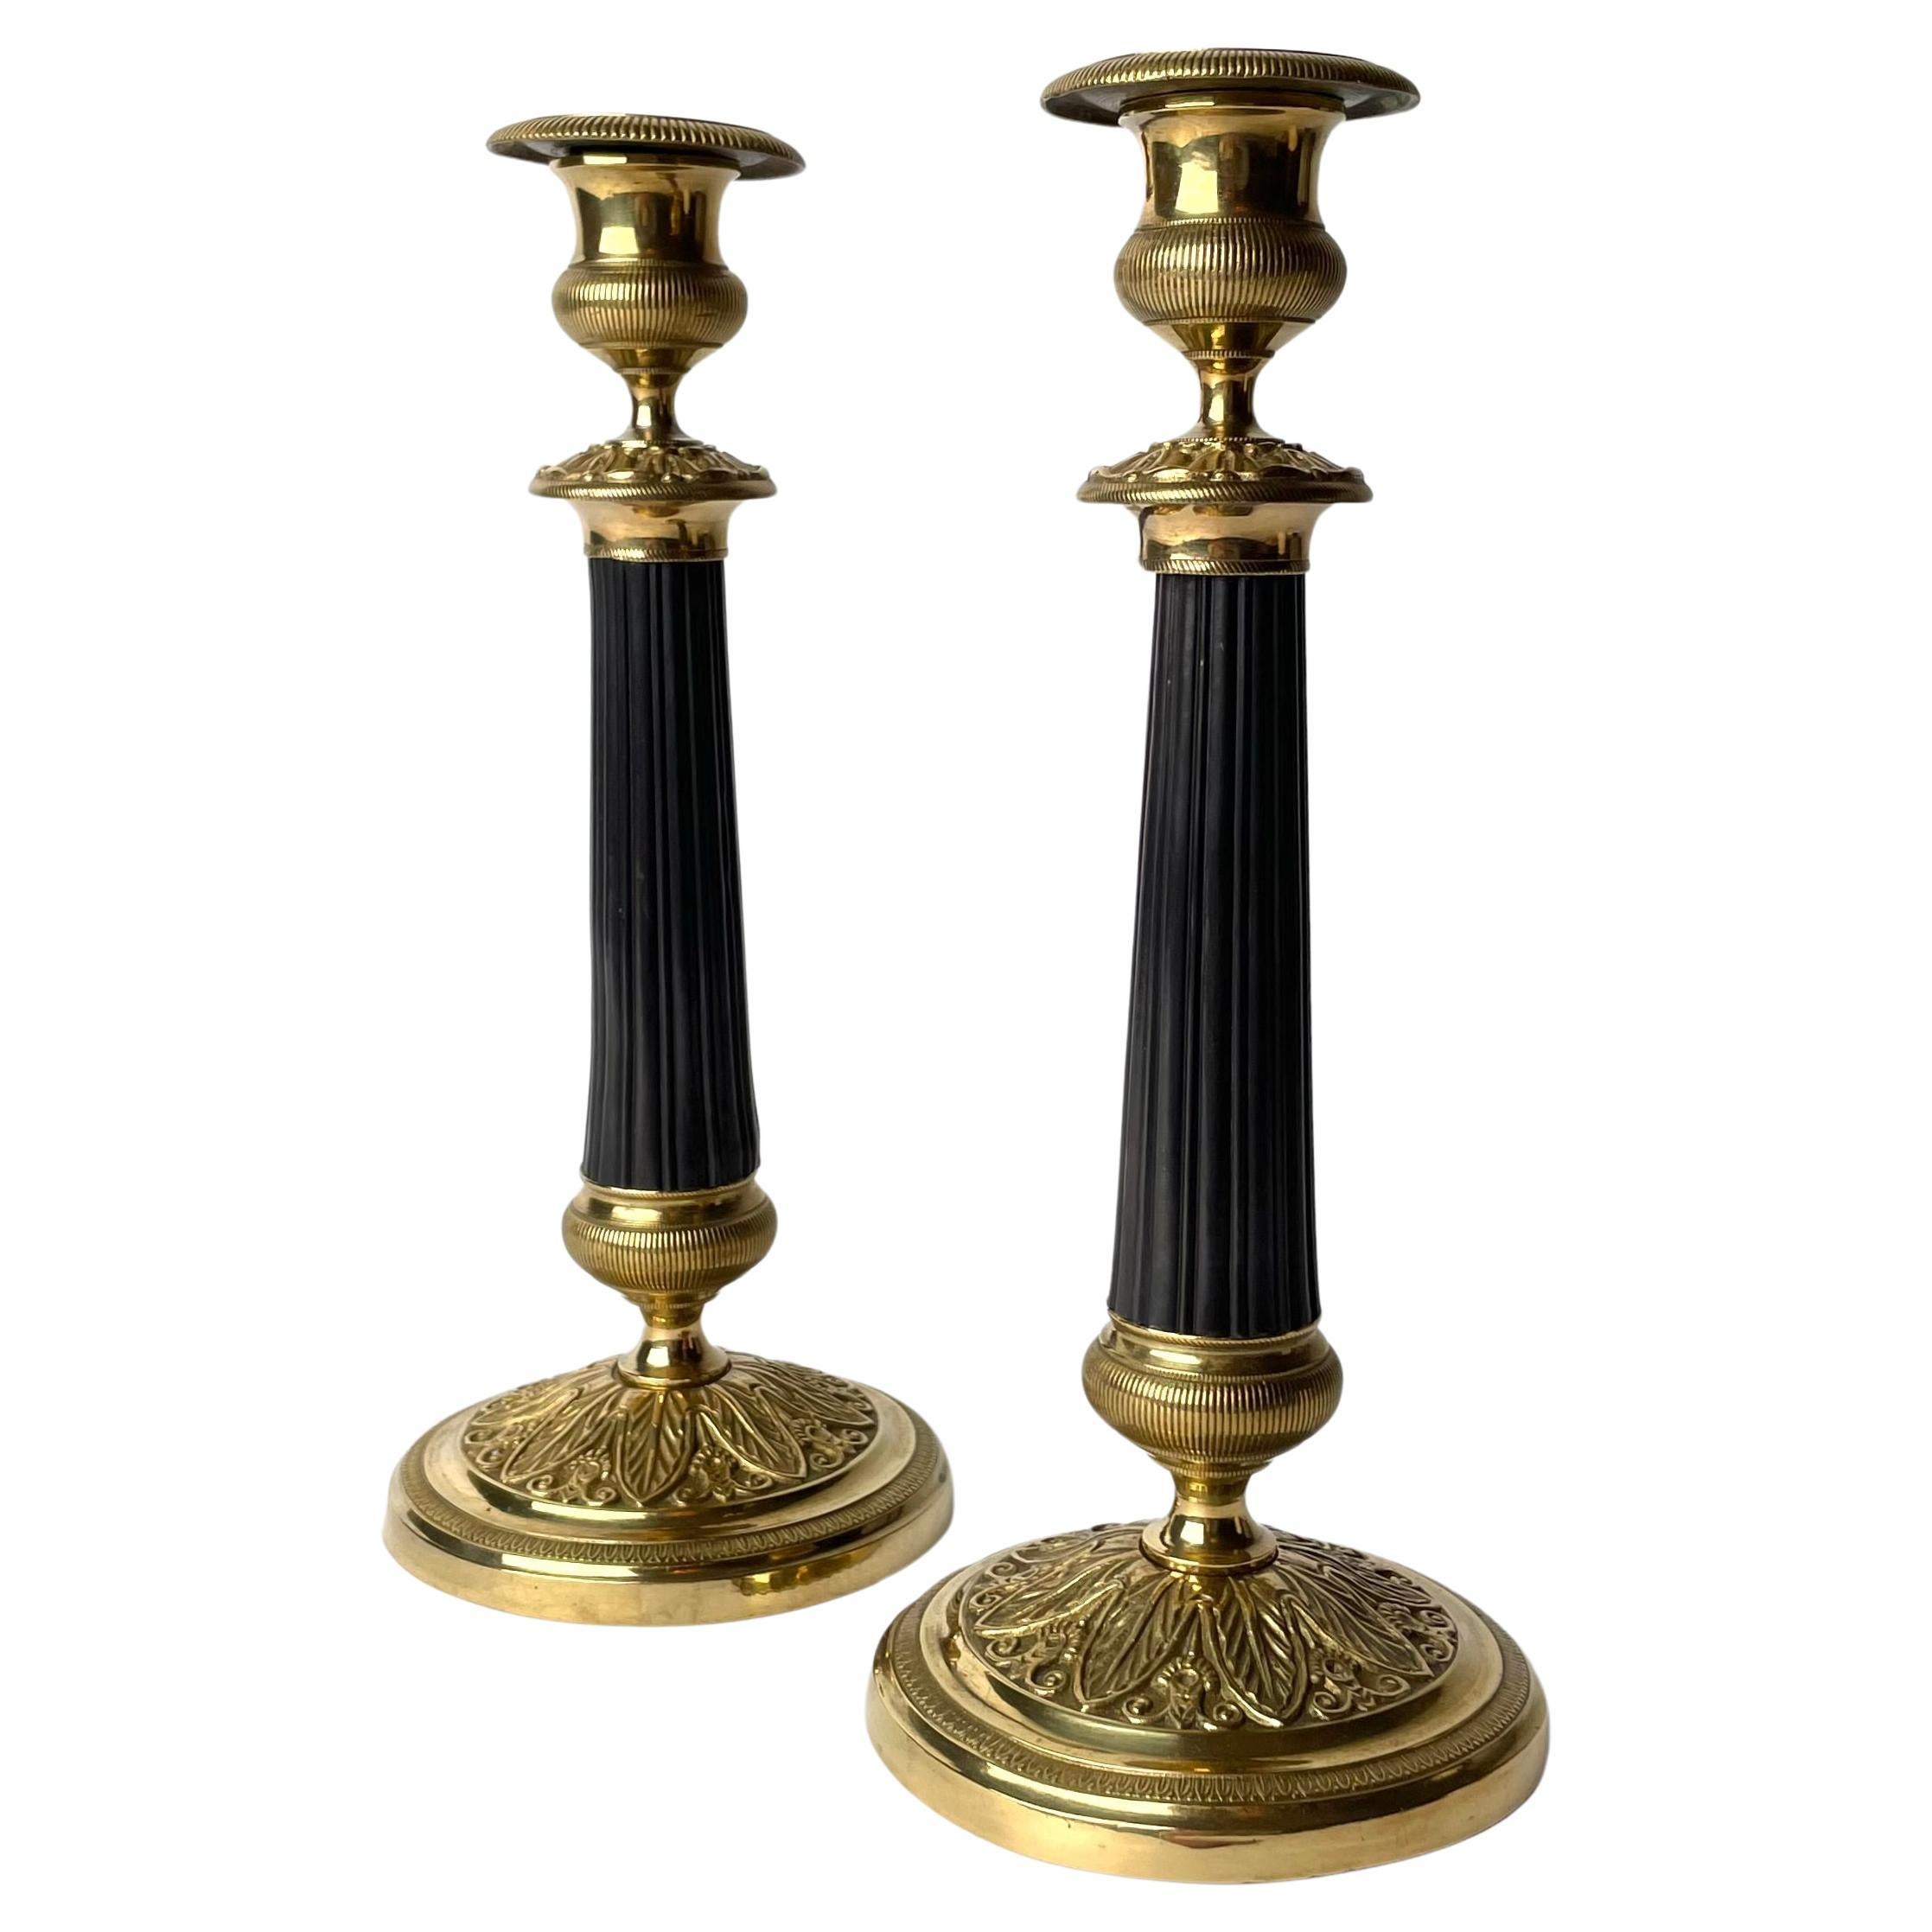 Elegant pair of Candlesticks in gilt & dark patinated bronze. Empire from 1820s